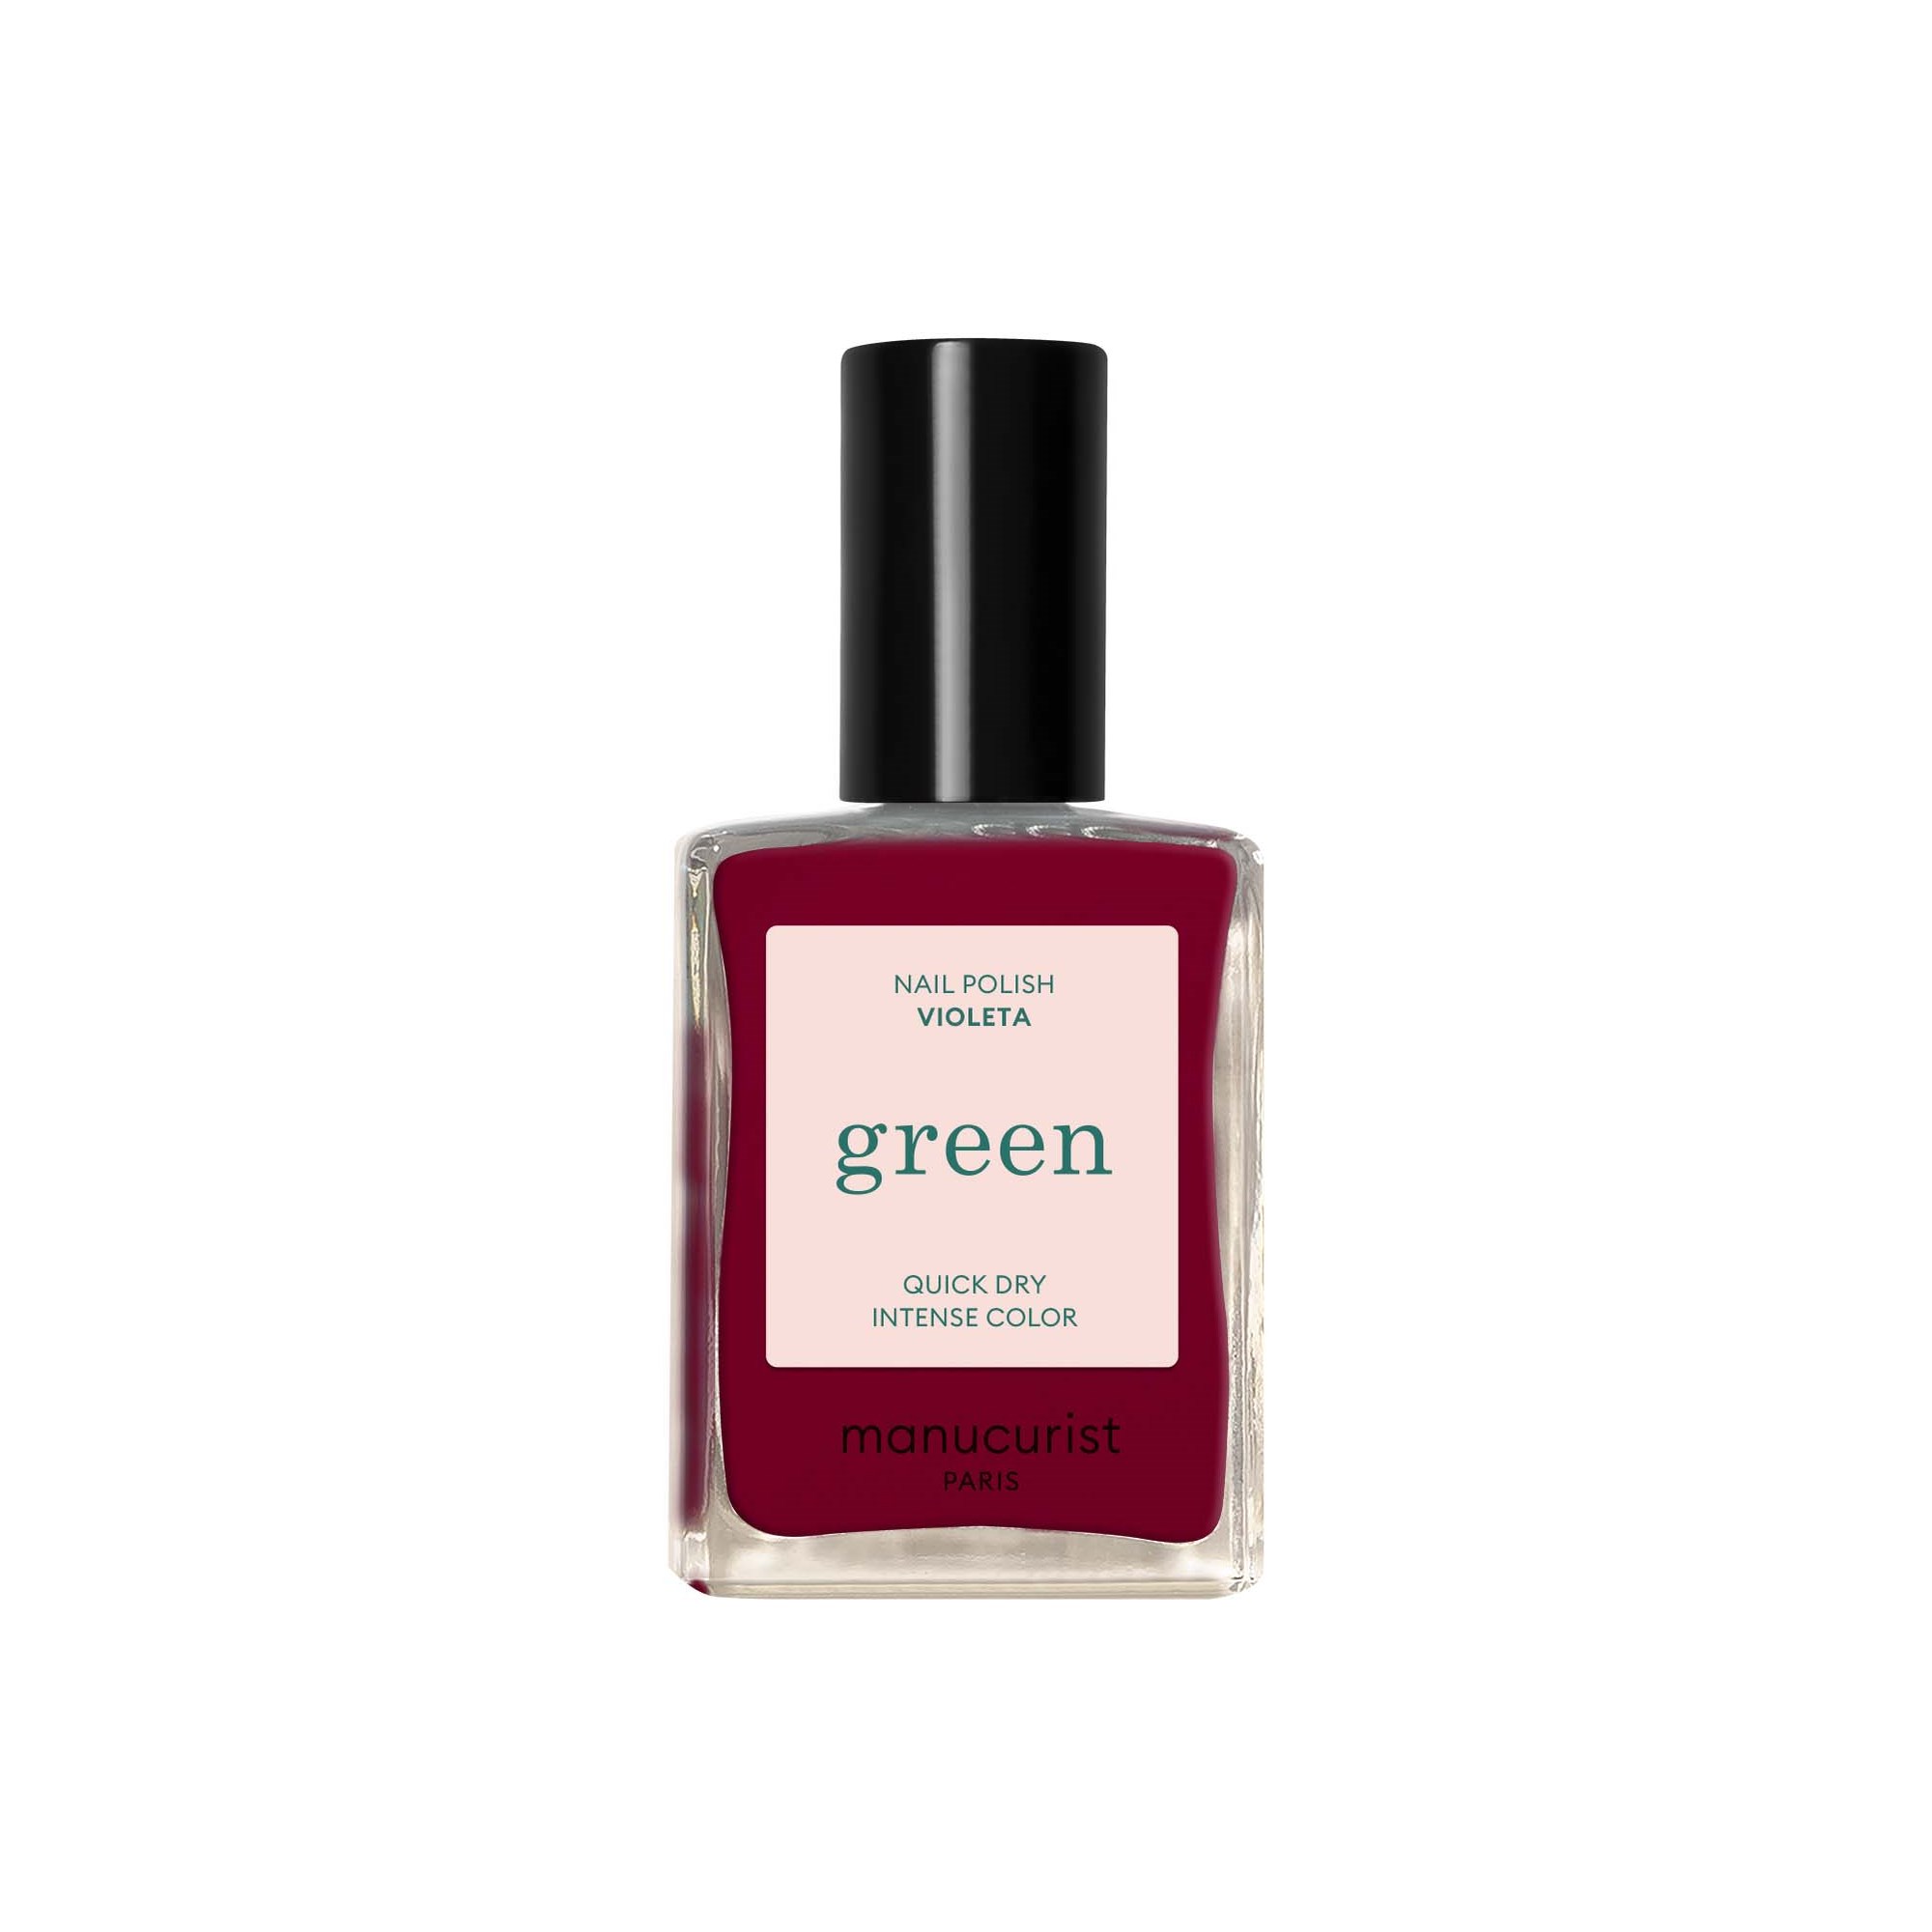 Manucurist Green Nail Polish Violeta